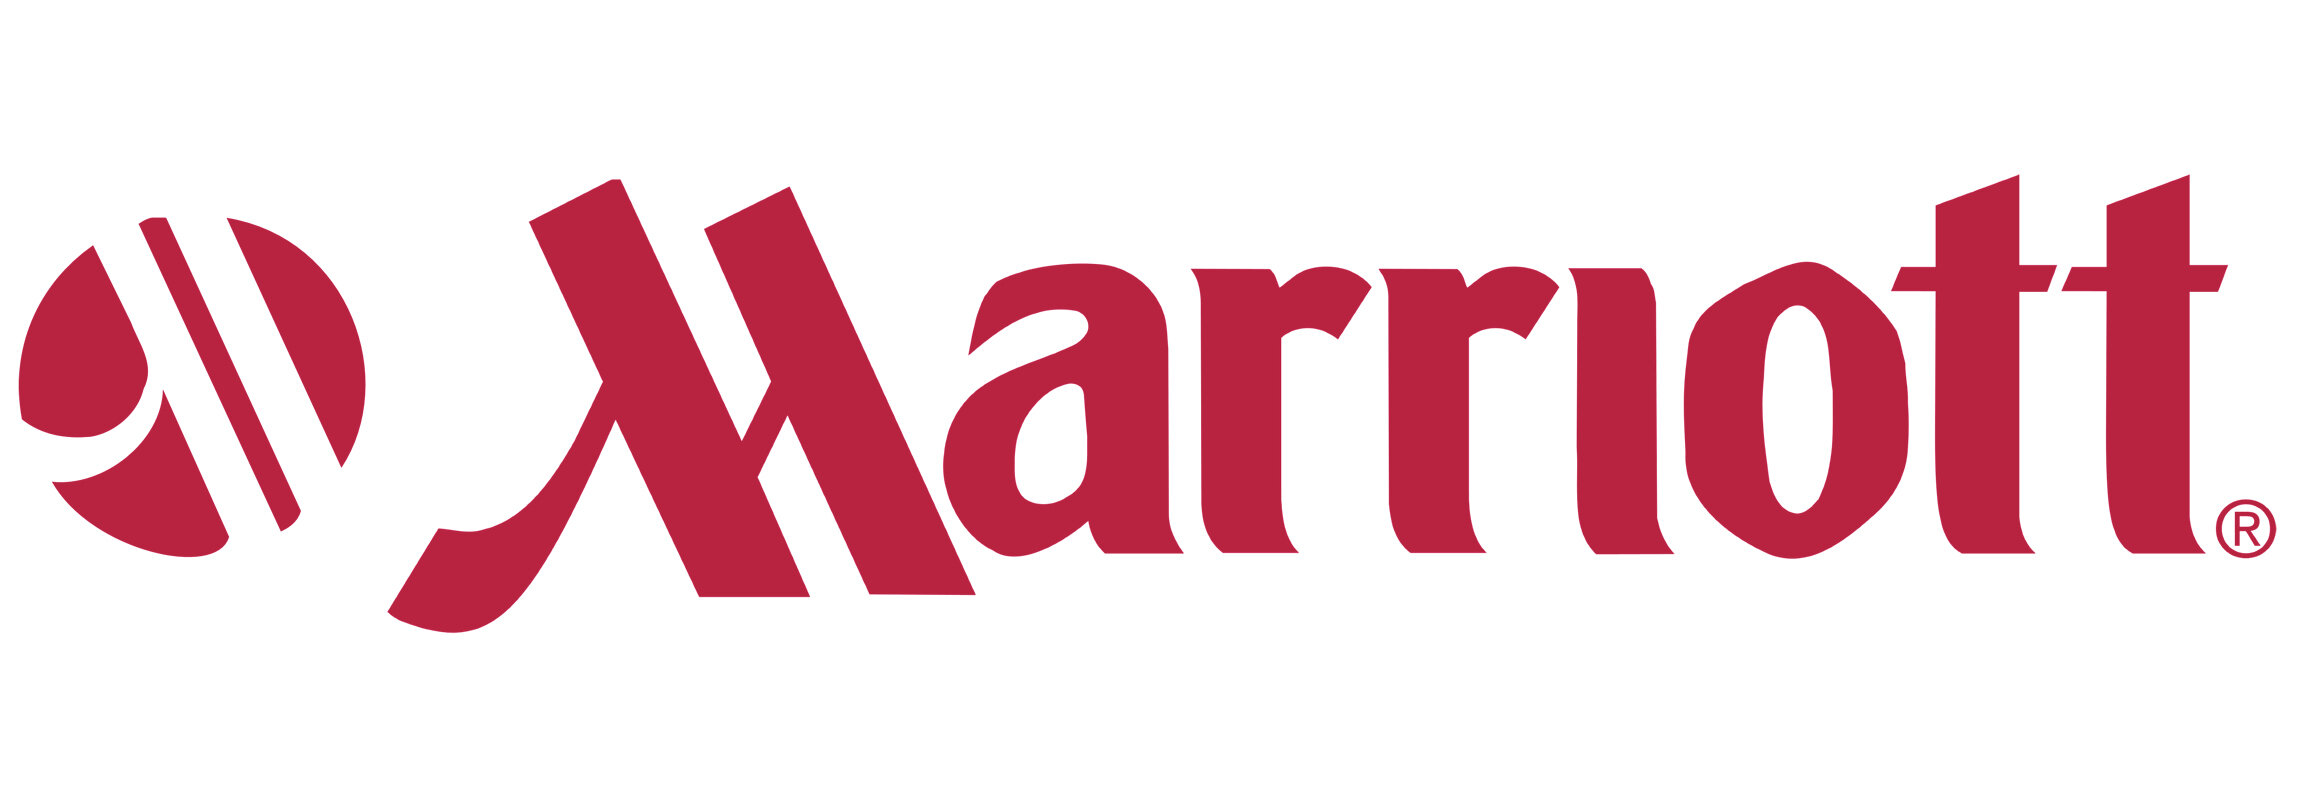 Marriott-emblem.jpg